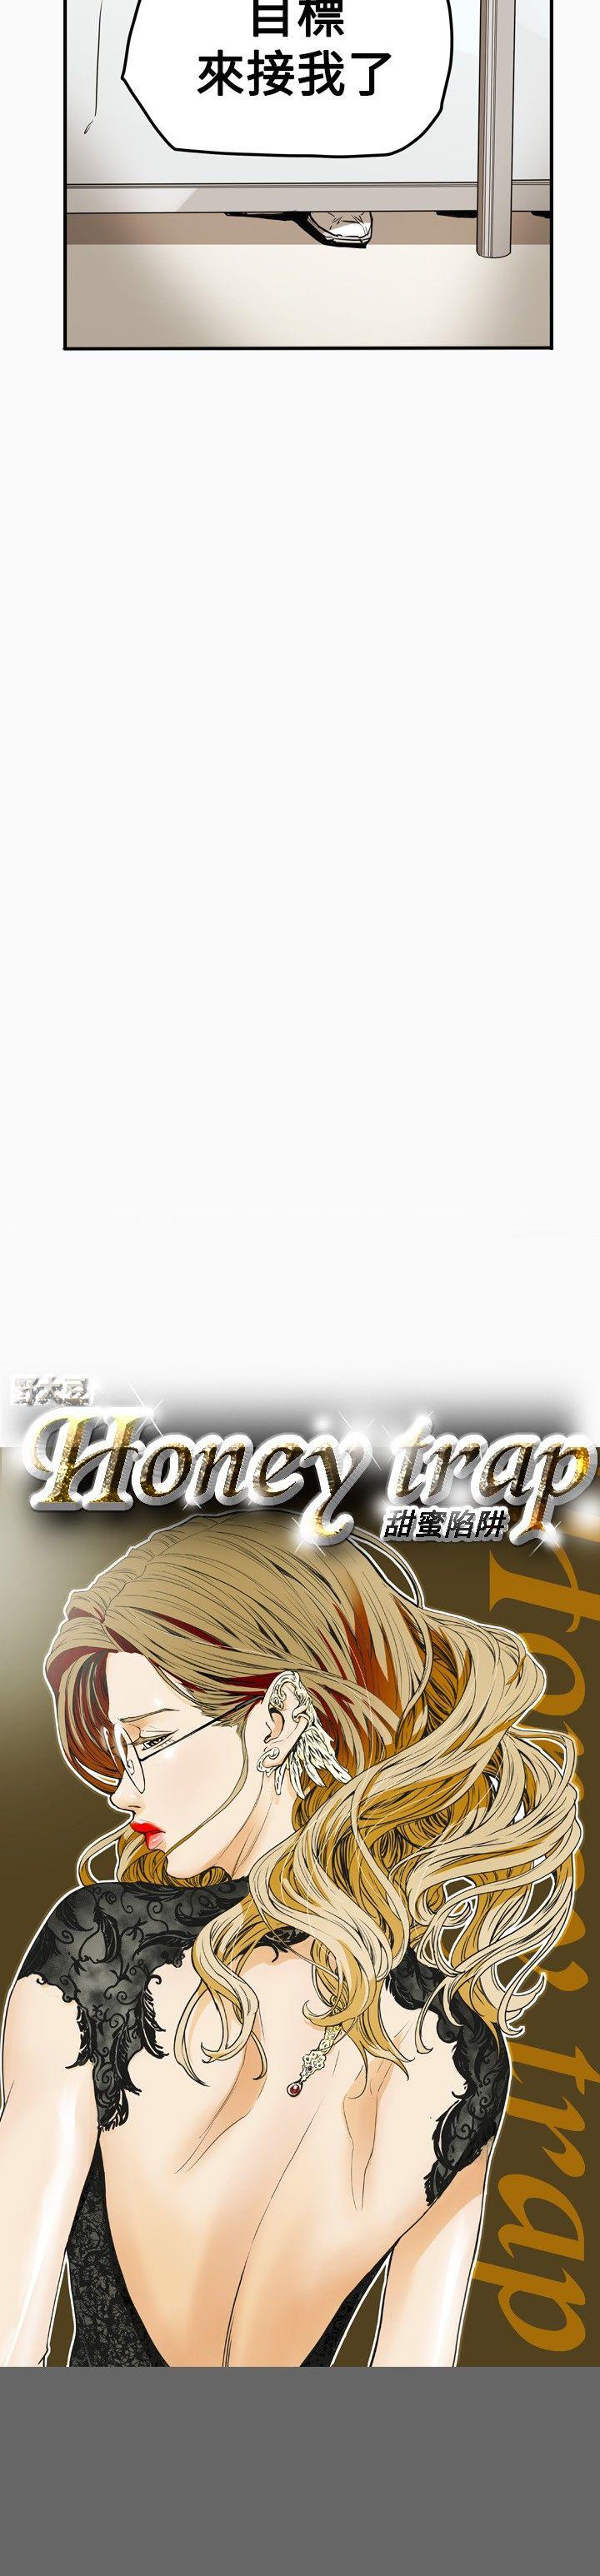 Honey trap 甜蜜陷阱  第34话 漫画图片5.jpg